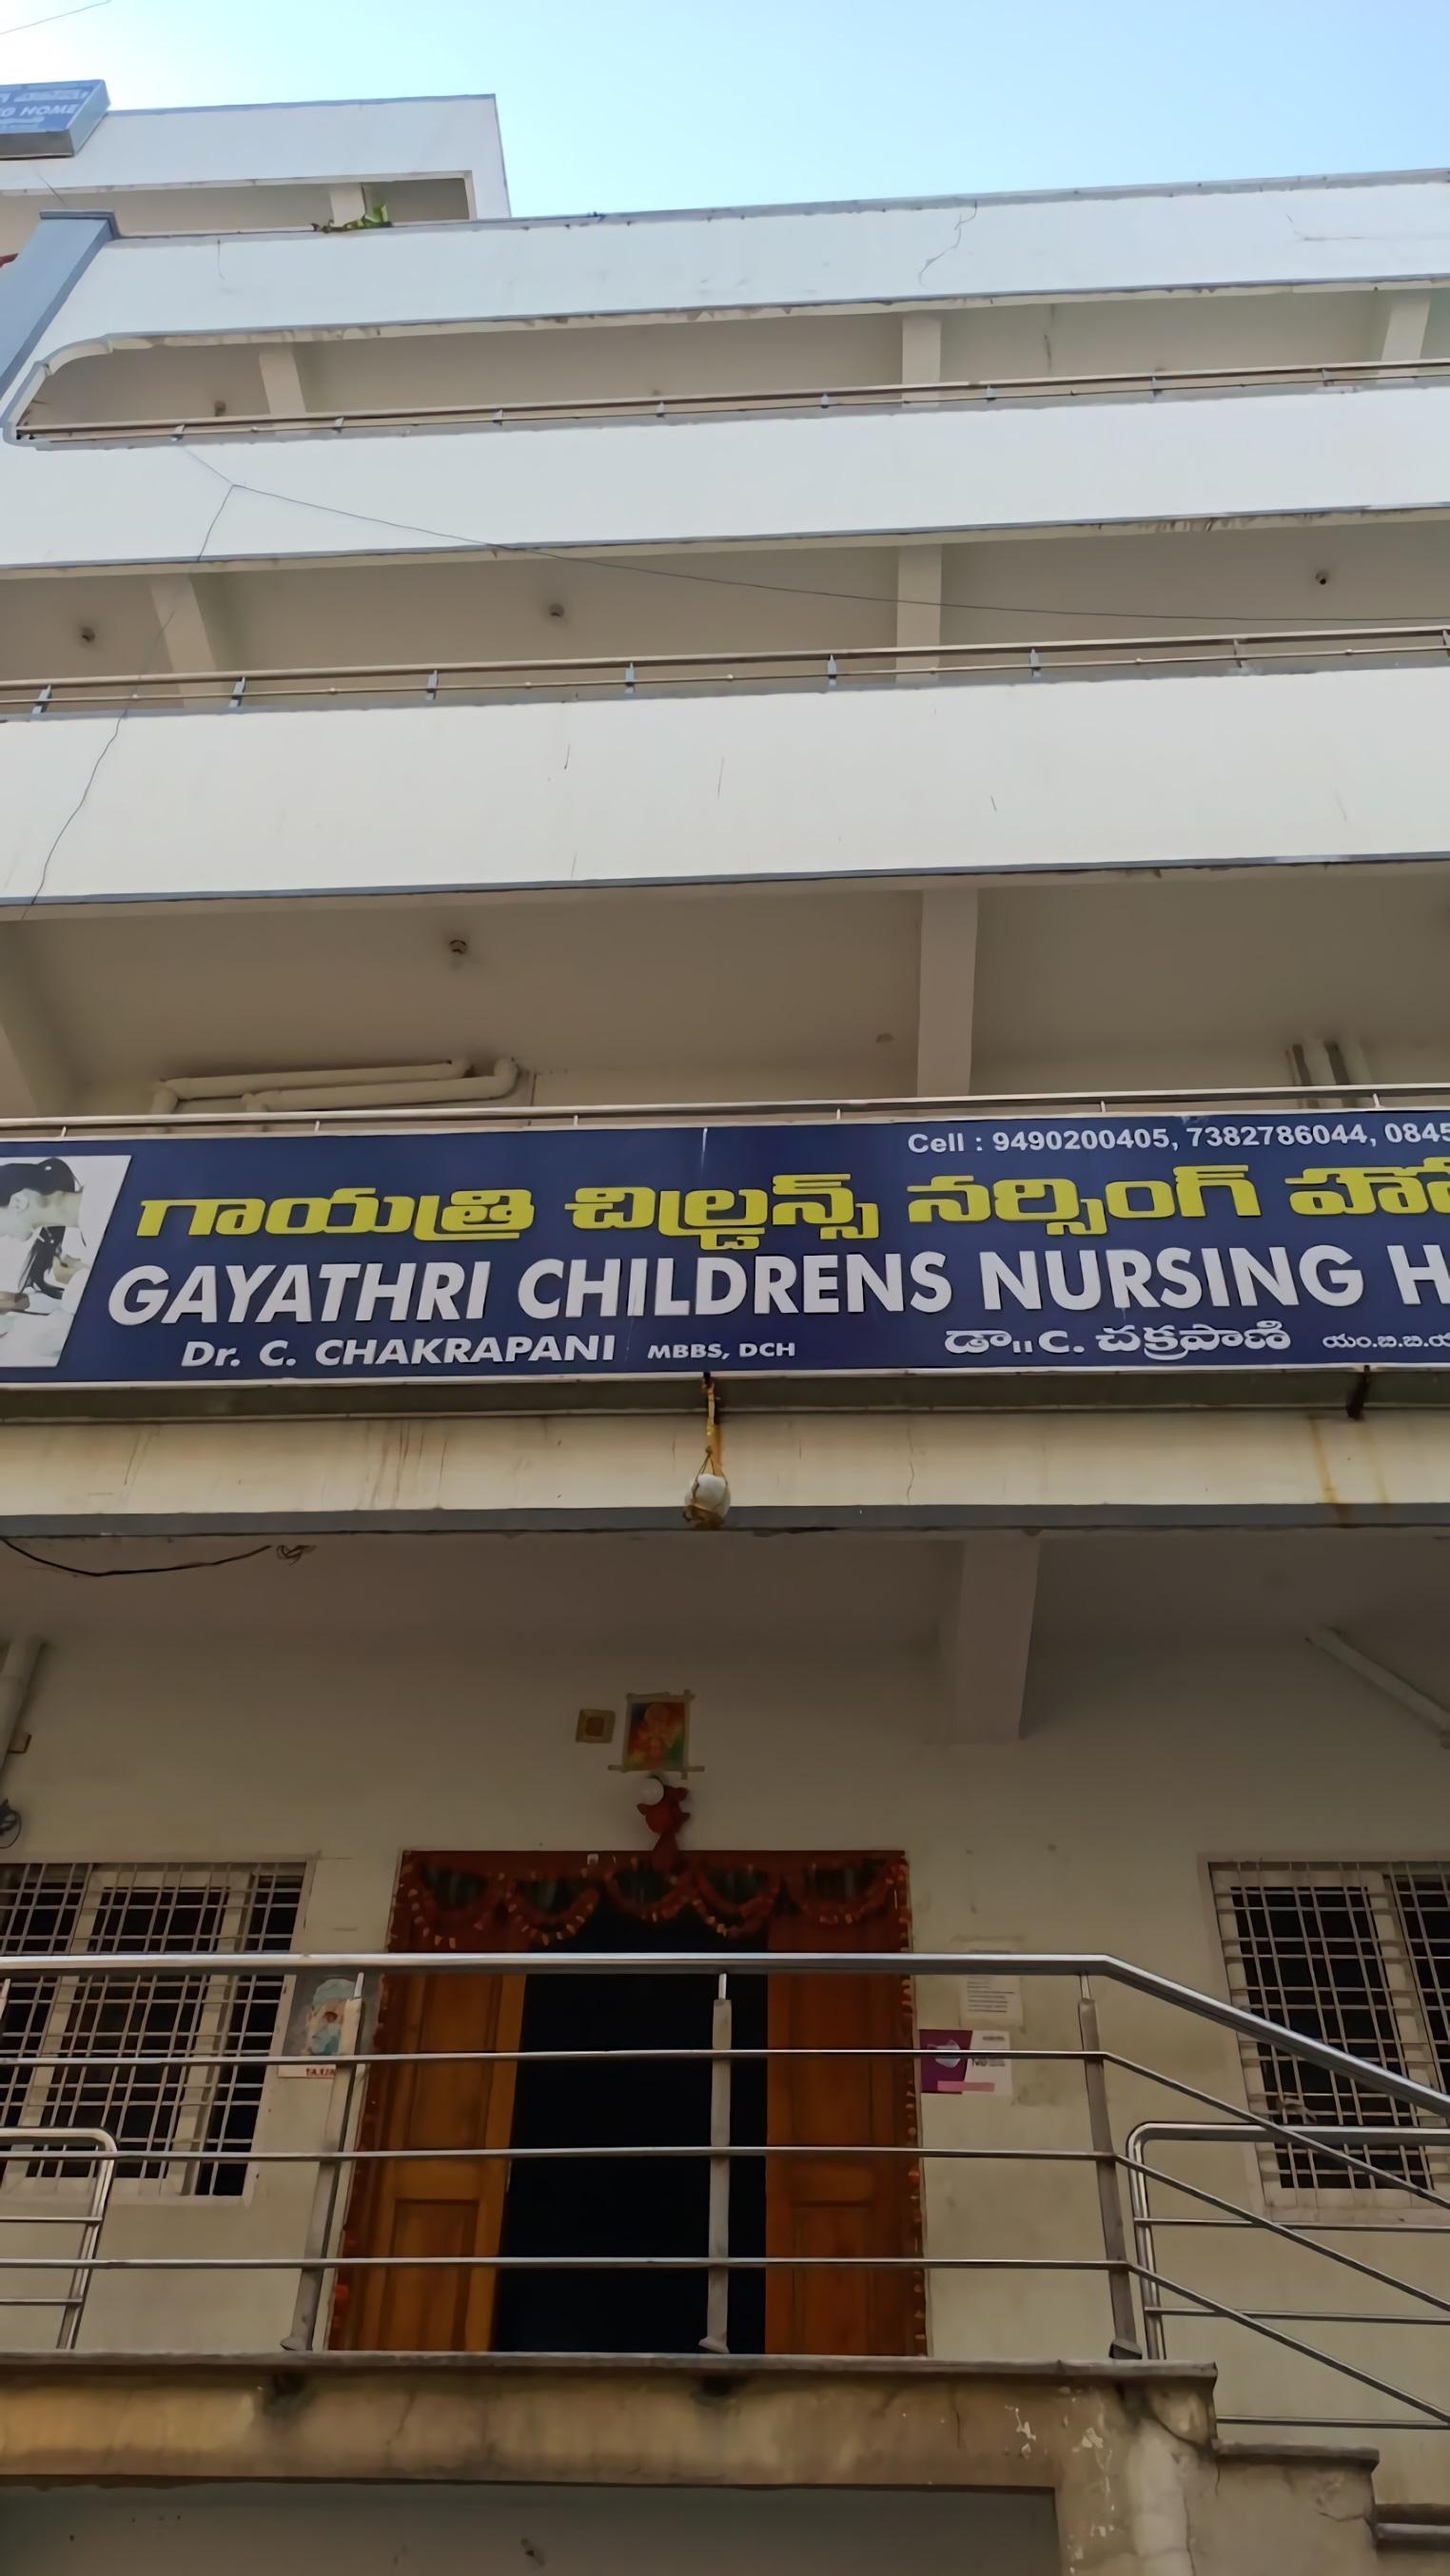 Gayathri Childrens Nursing Home